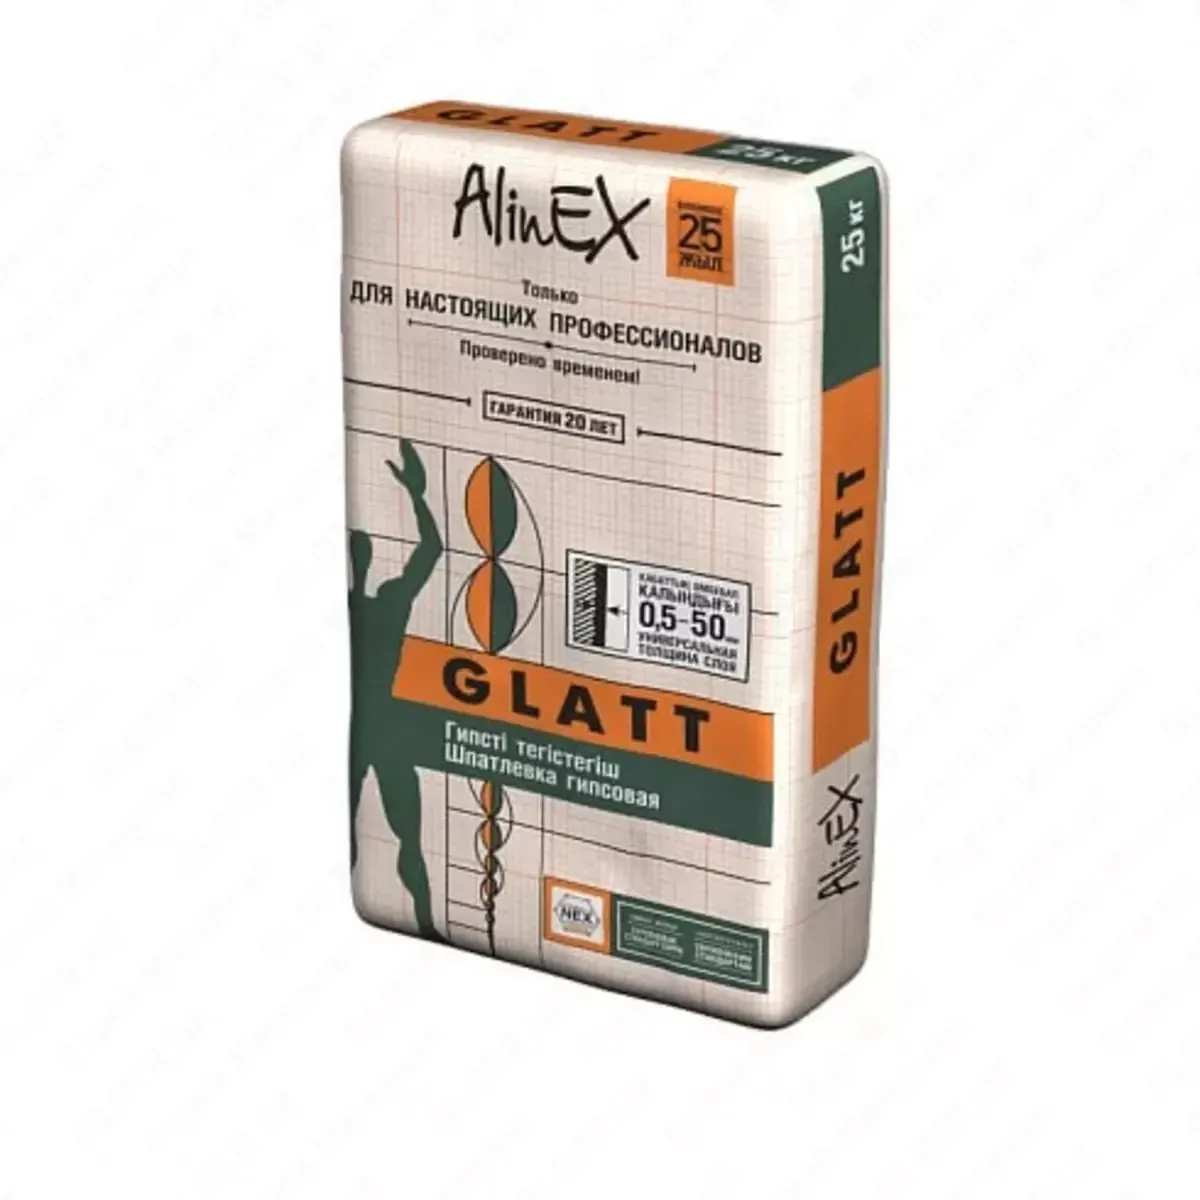 Шпатлевка Glatt 25 кг ALINEX#1